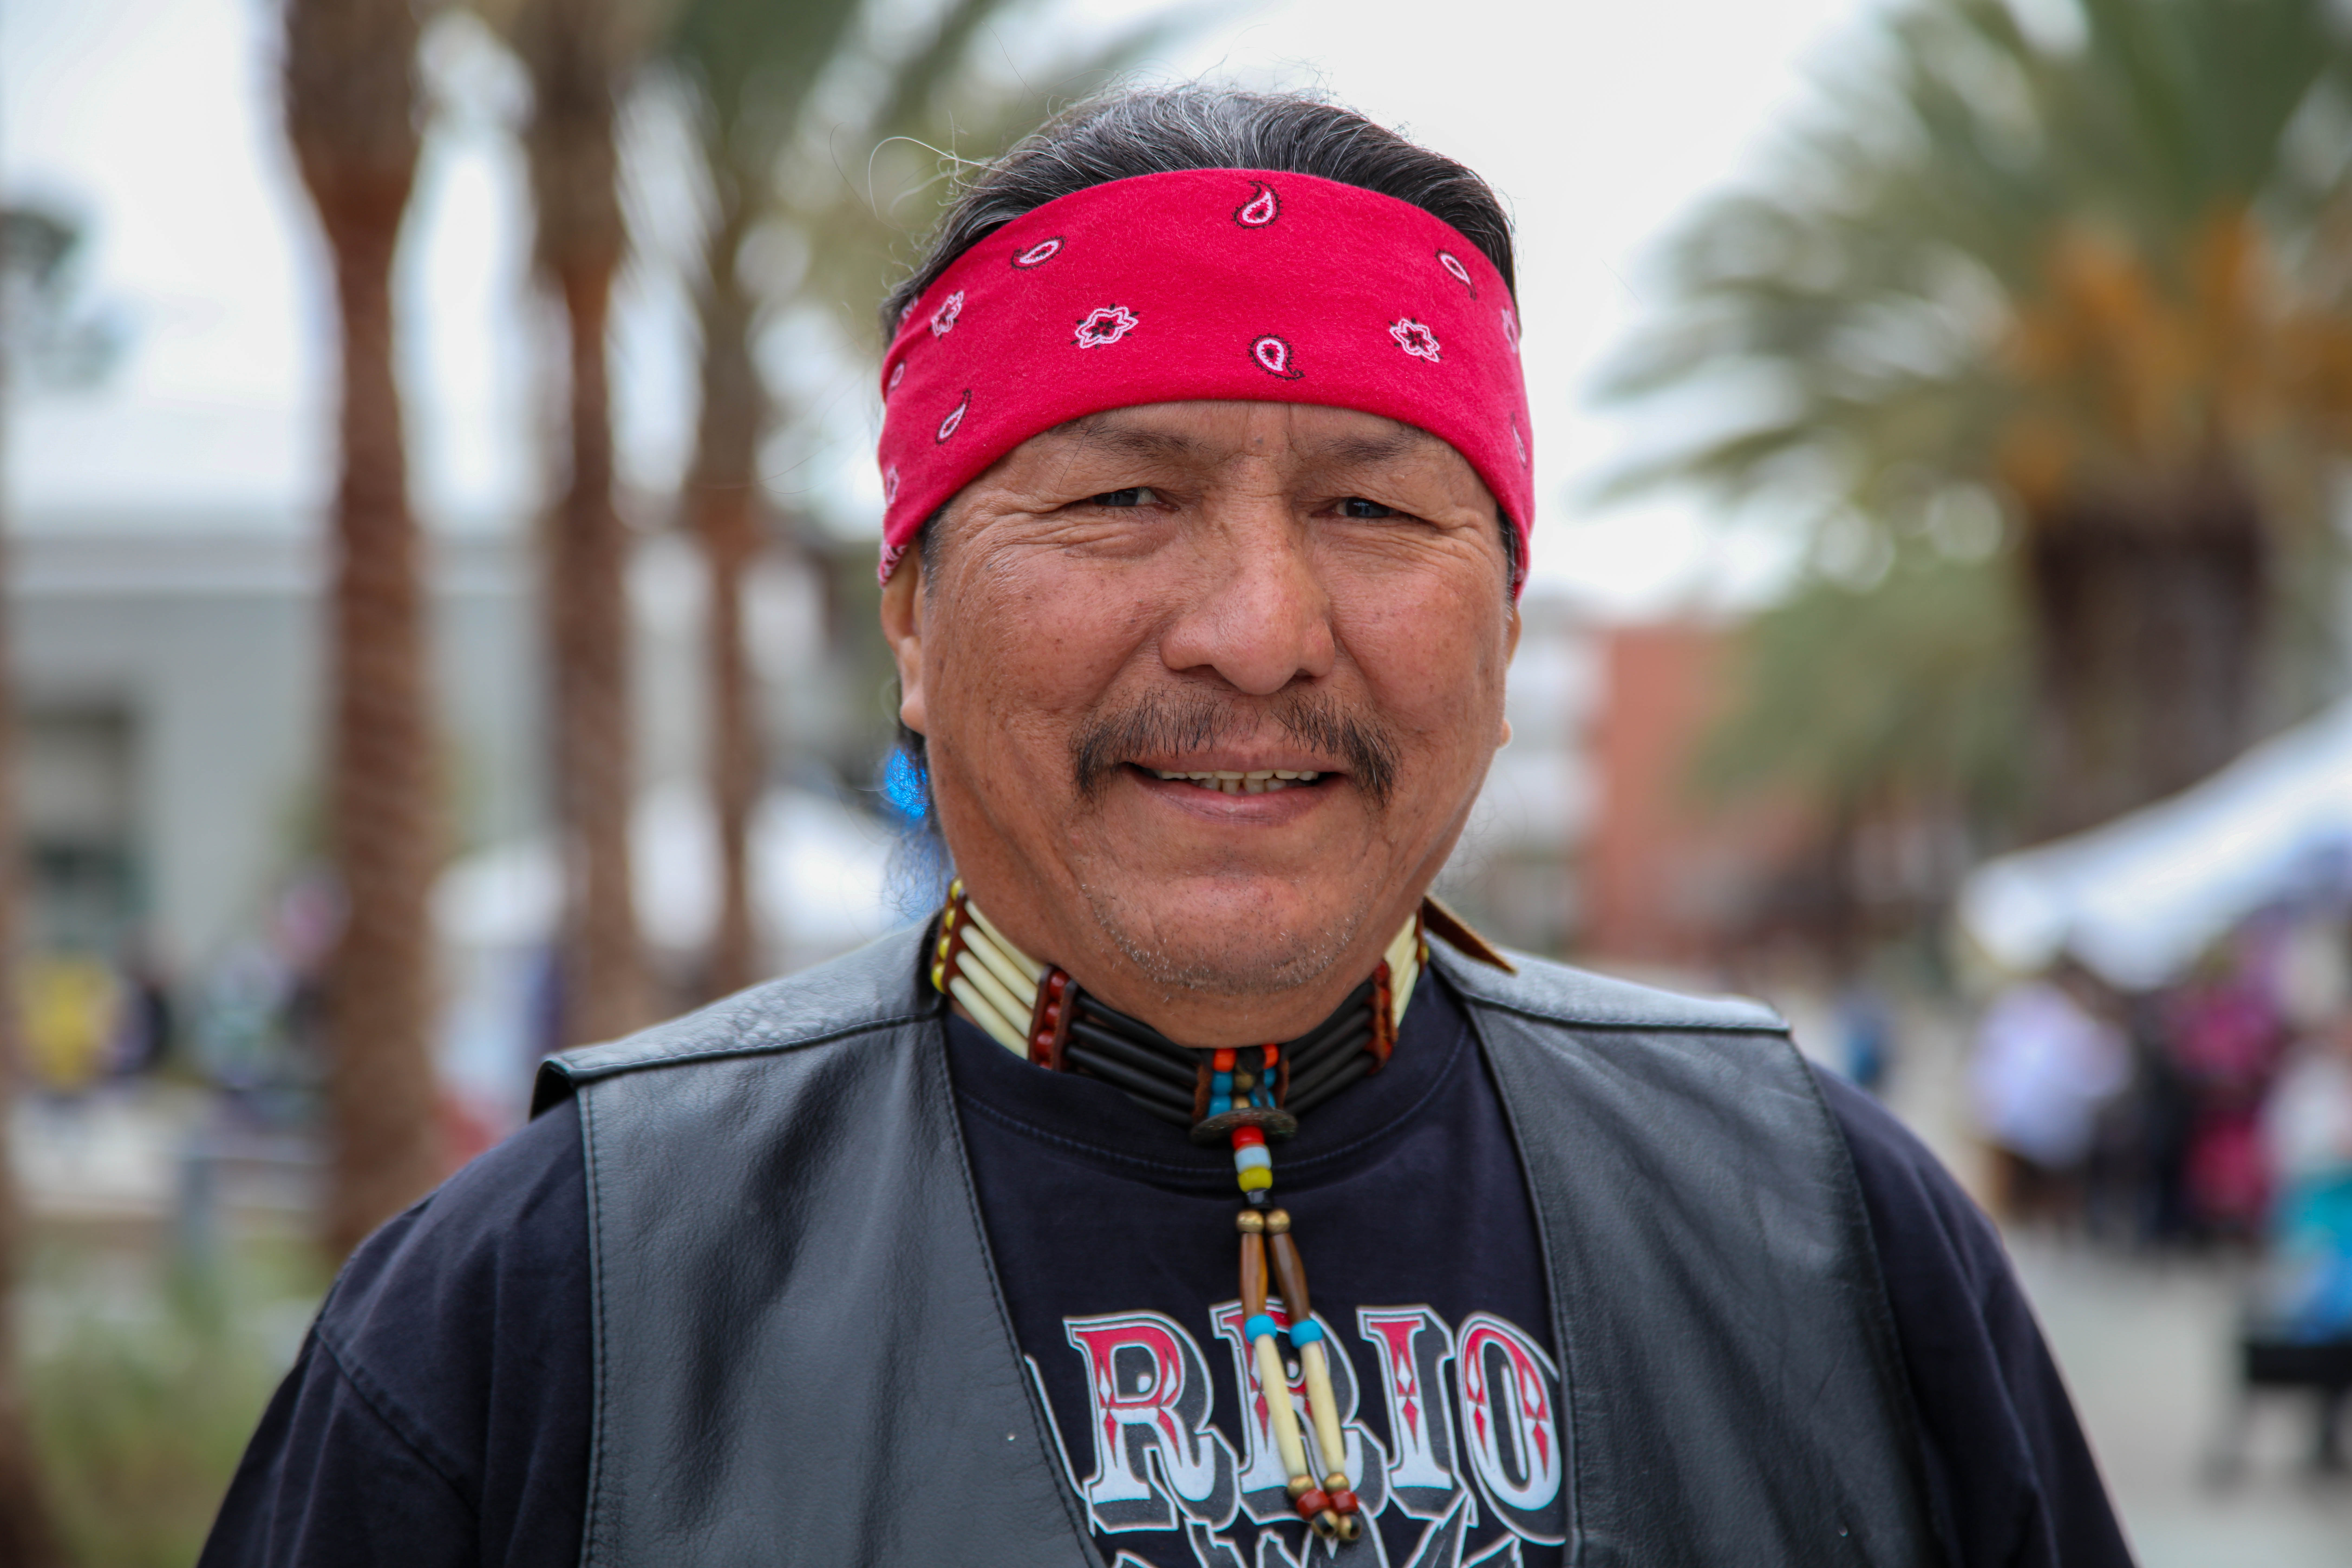 A Native American man